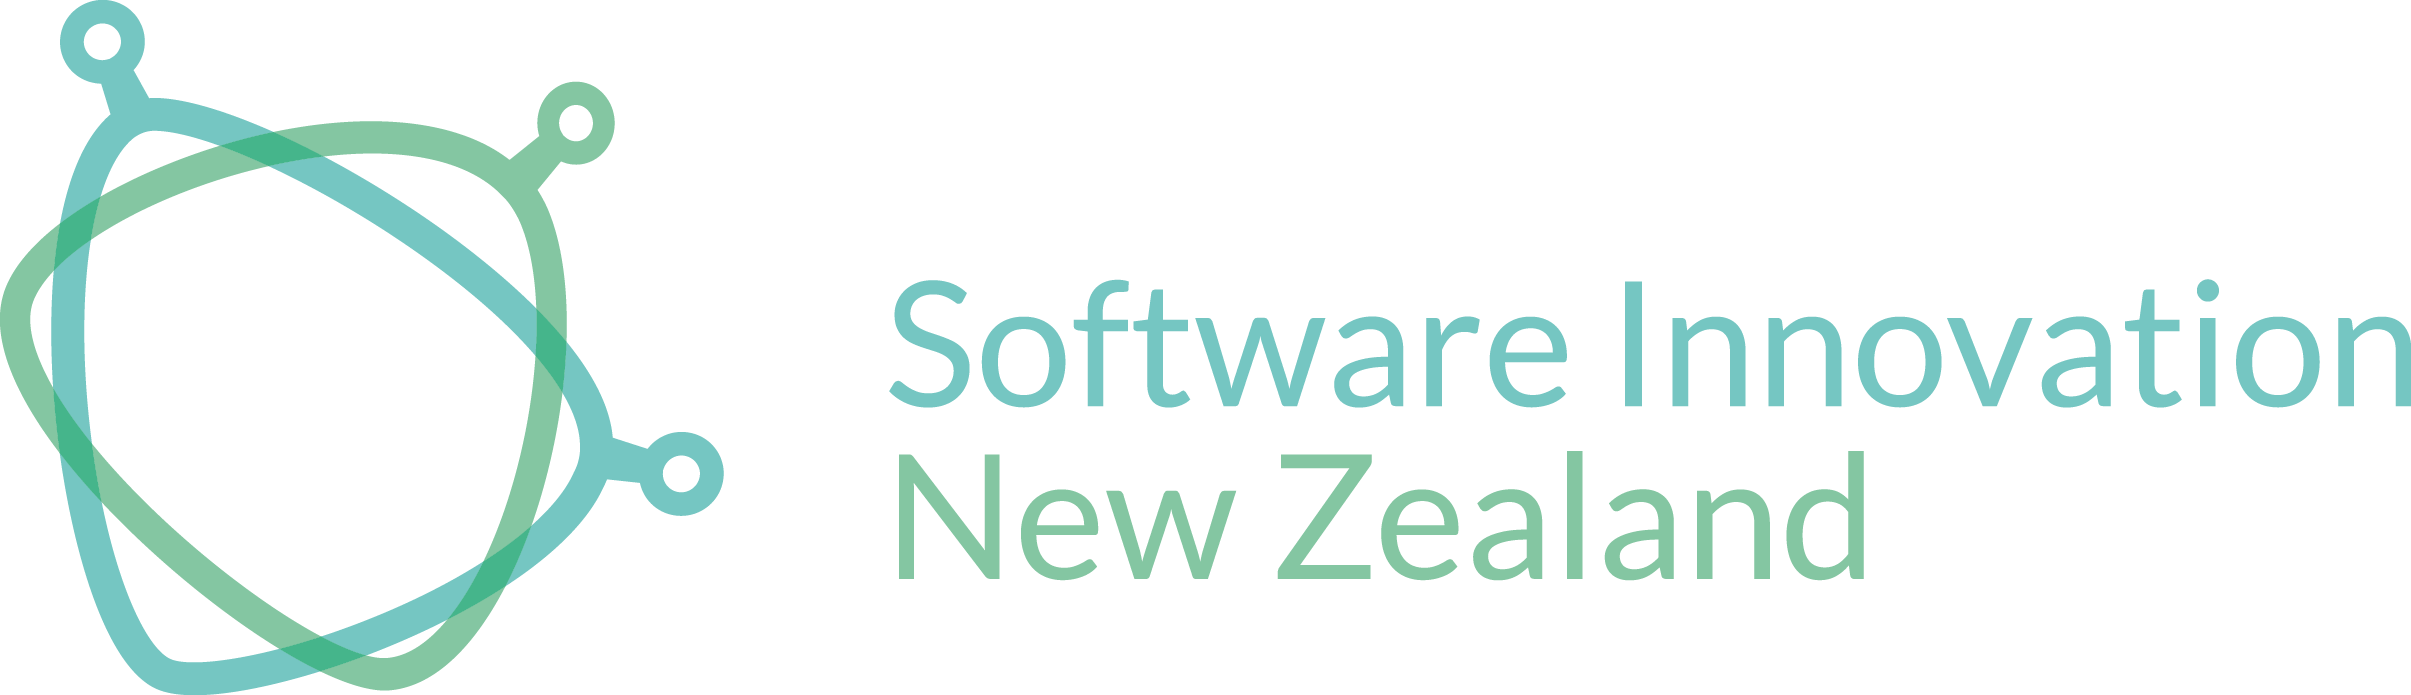 Software Innovation New Zealand